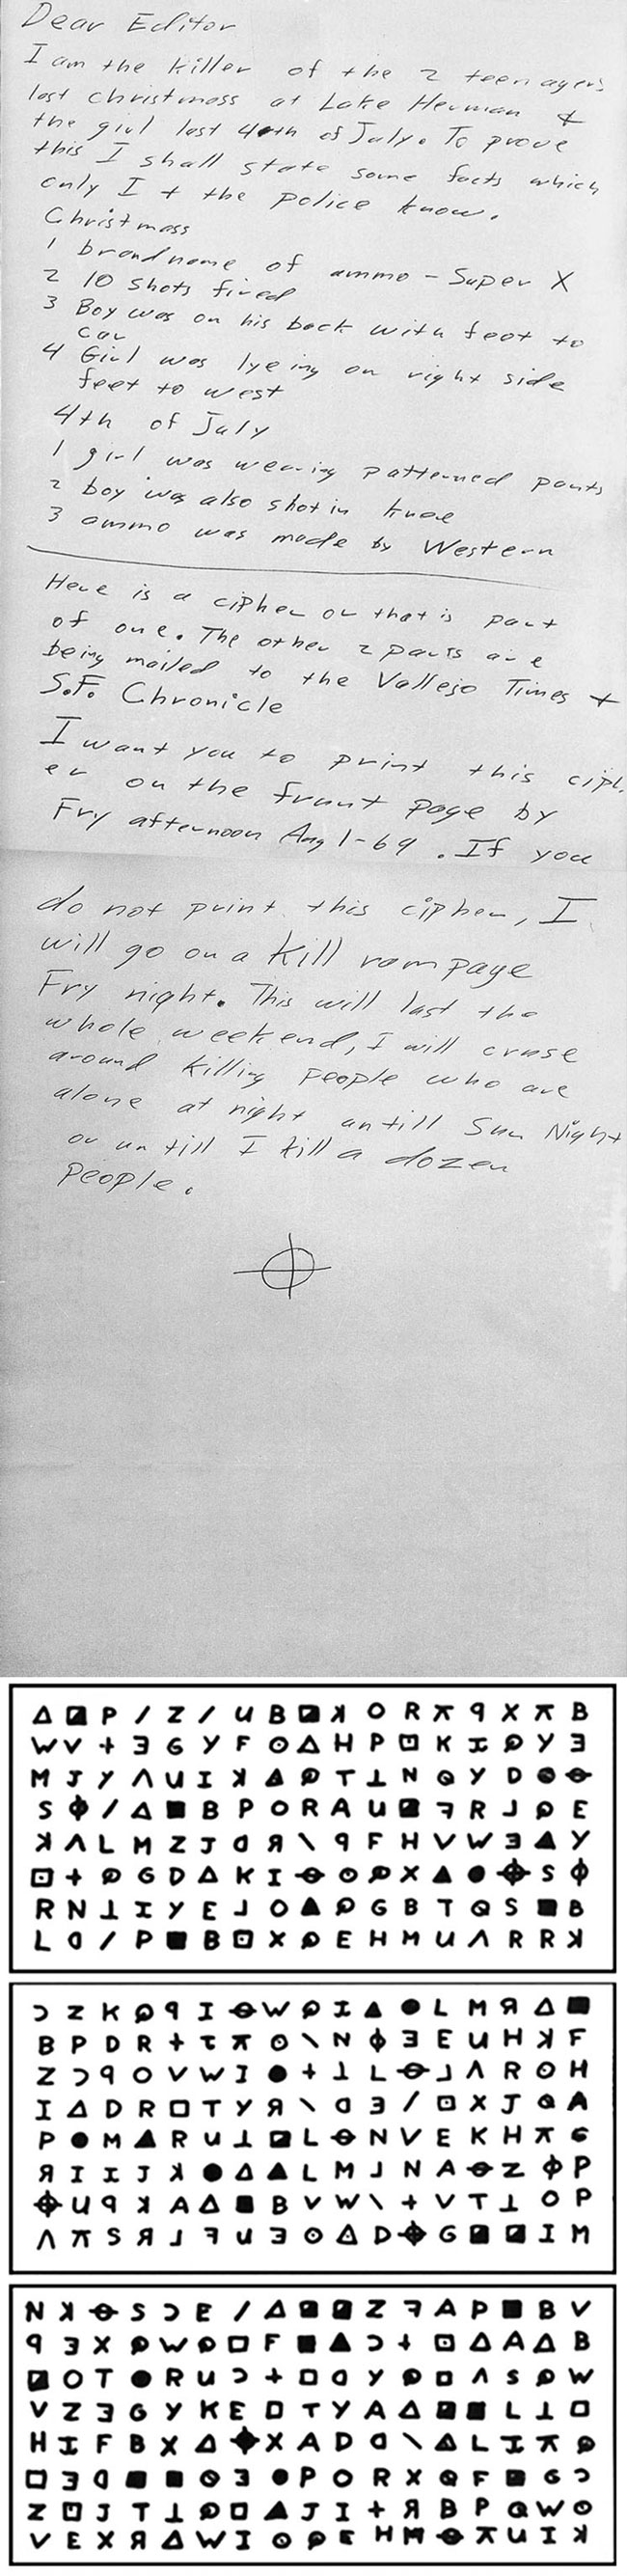 01-Letter-to-San-Fran-Examiner-postmarked-July-31-1969